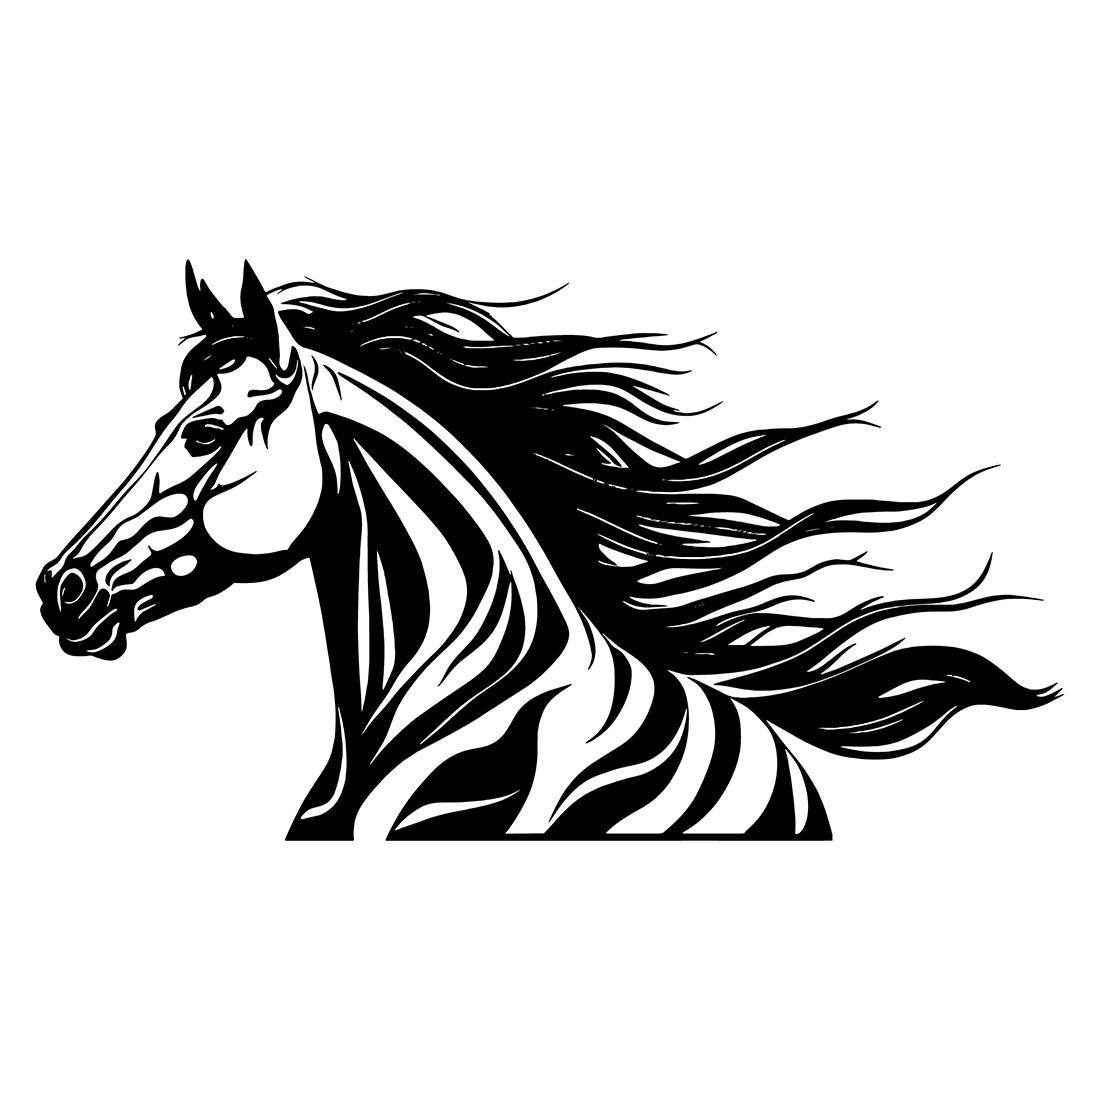 Horse Logo Illustration cover image.